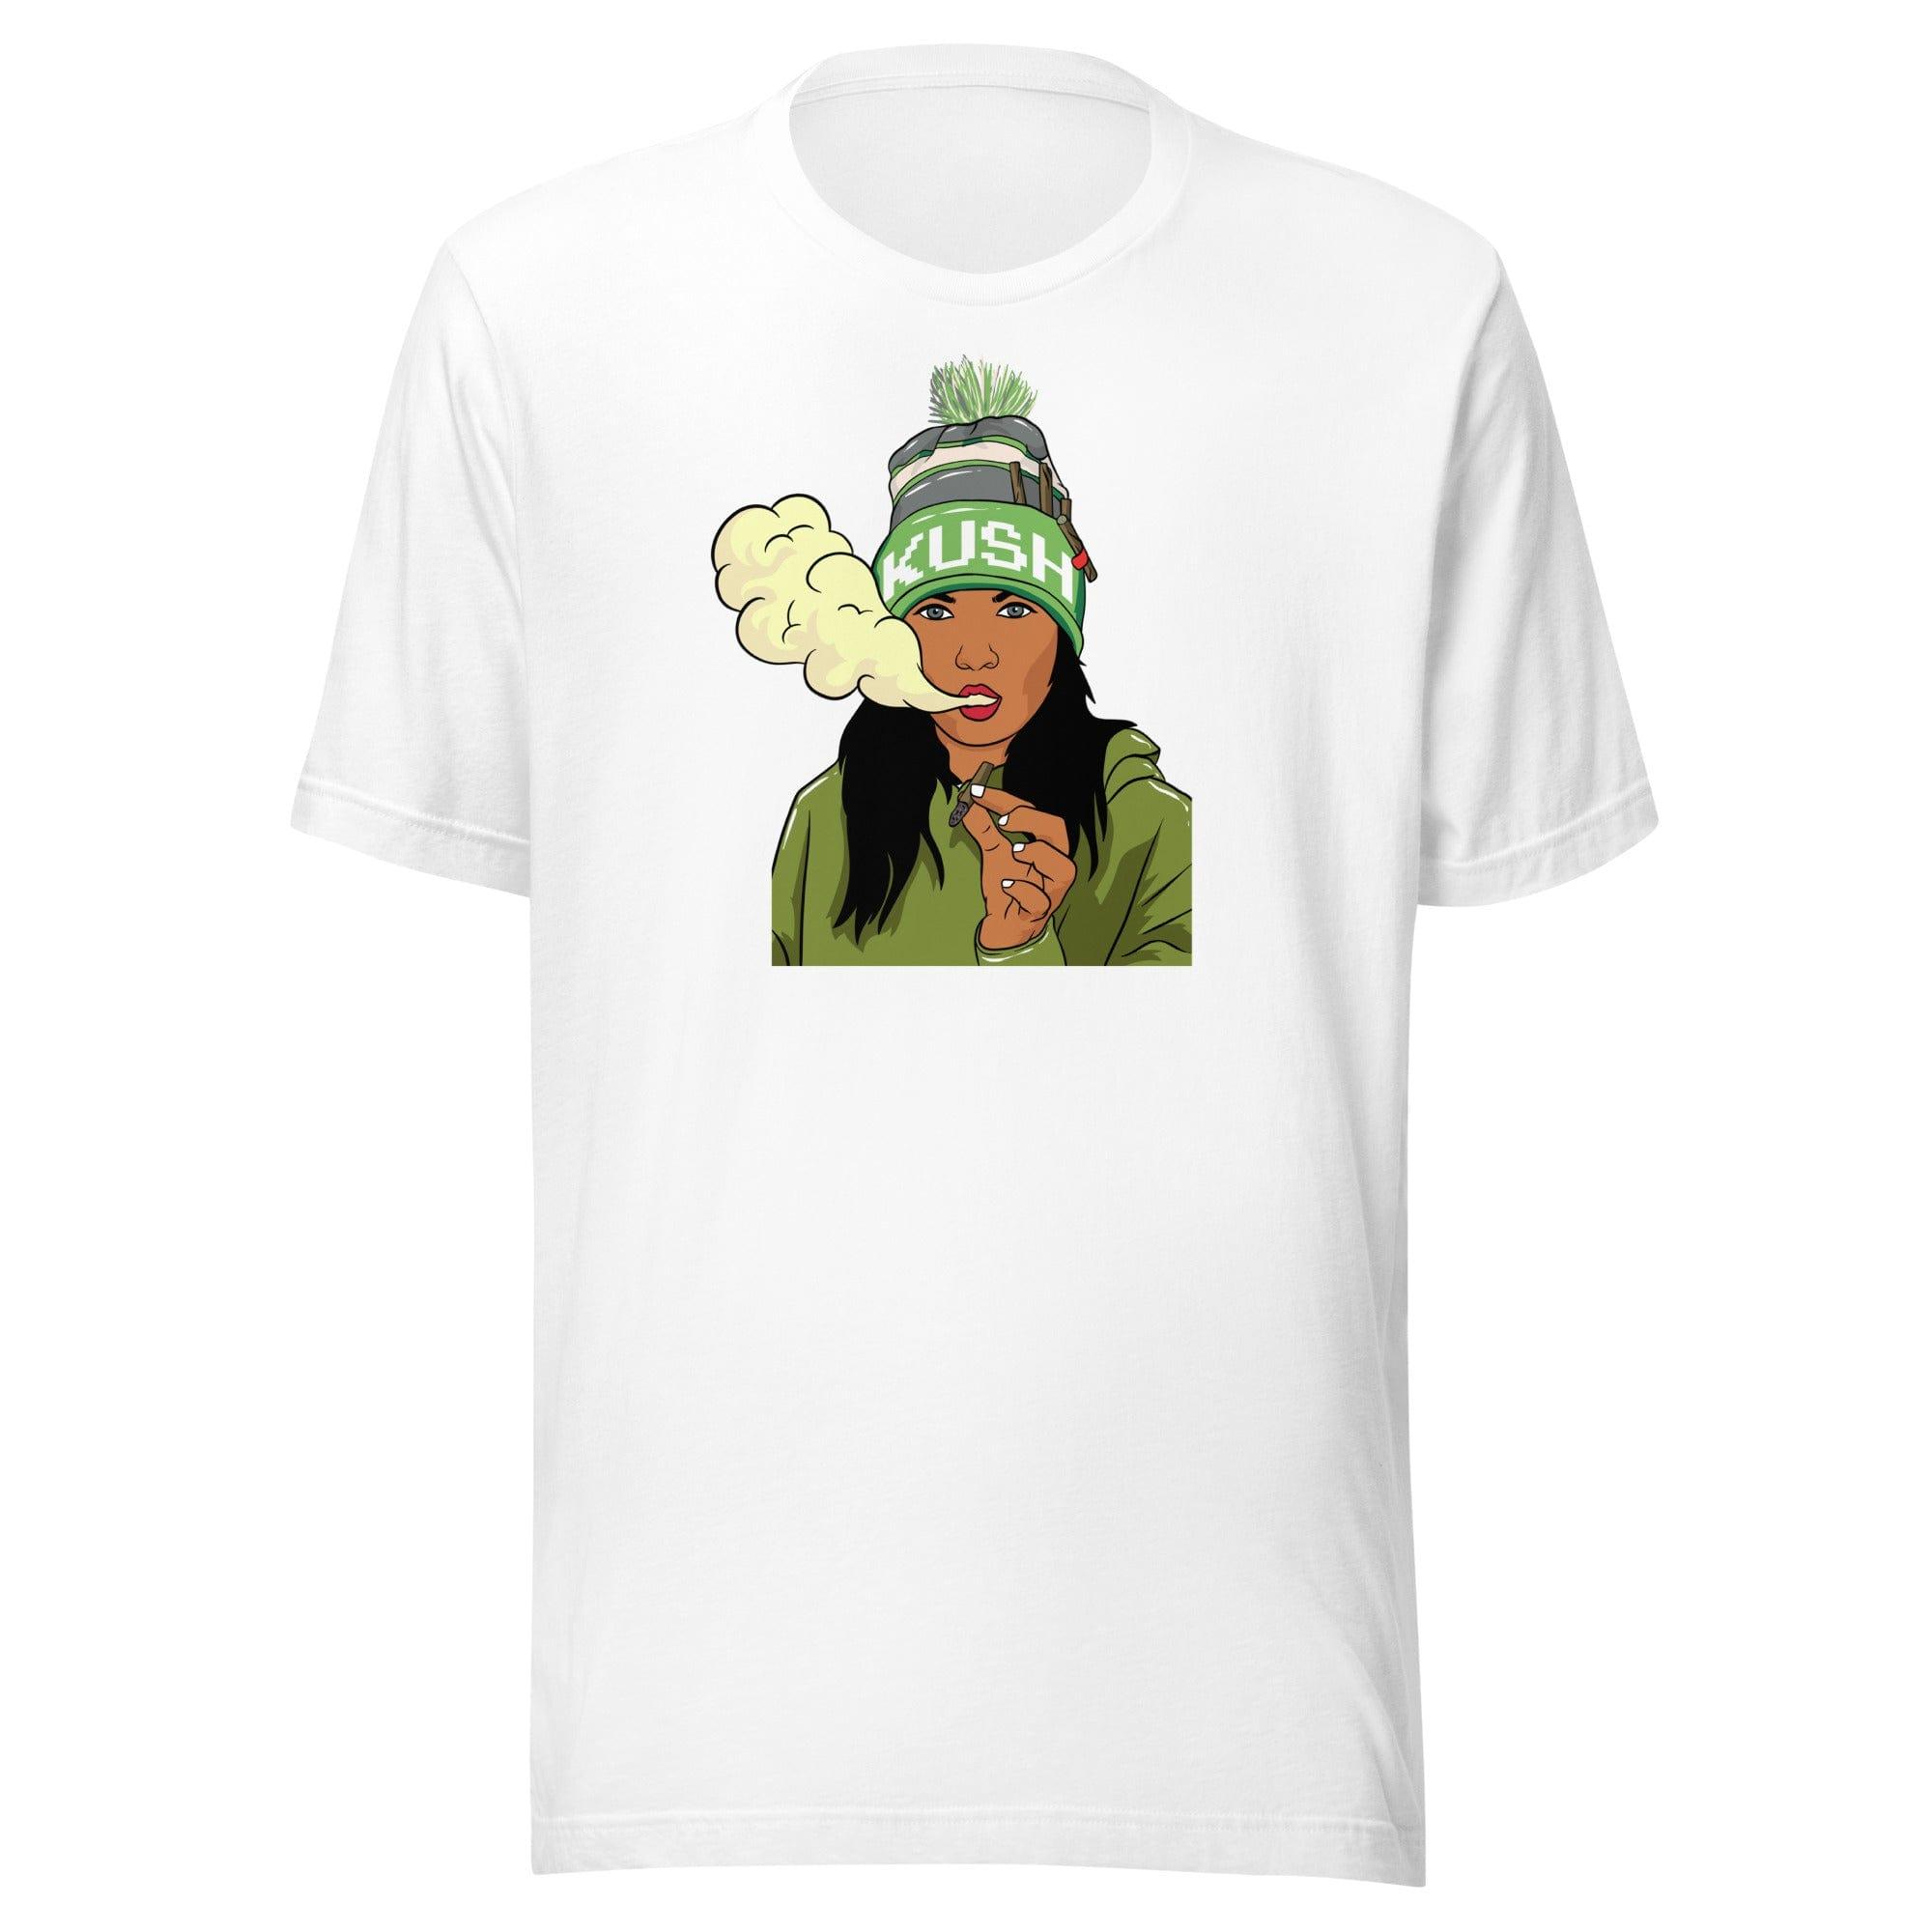 Marijuana T-shirt Sexy Women Blowing Smoke from Blunt Wearing Kush Hat Short Sleeve Unisex Top - TopKoalaTee